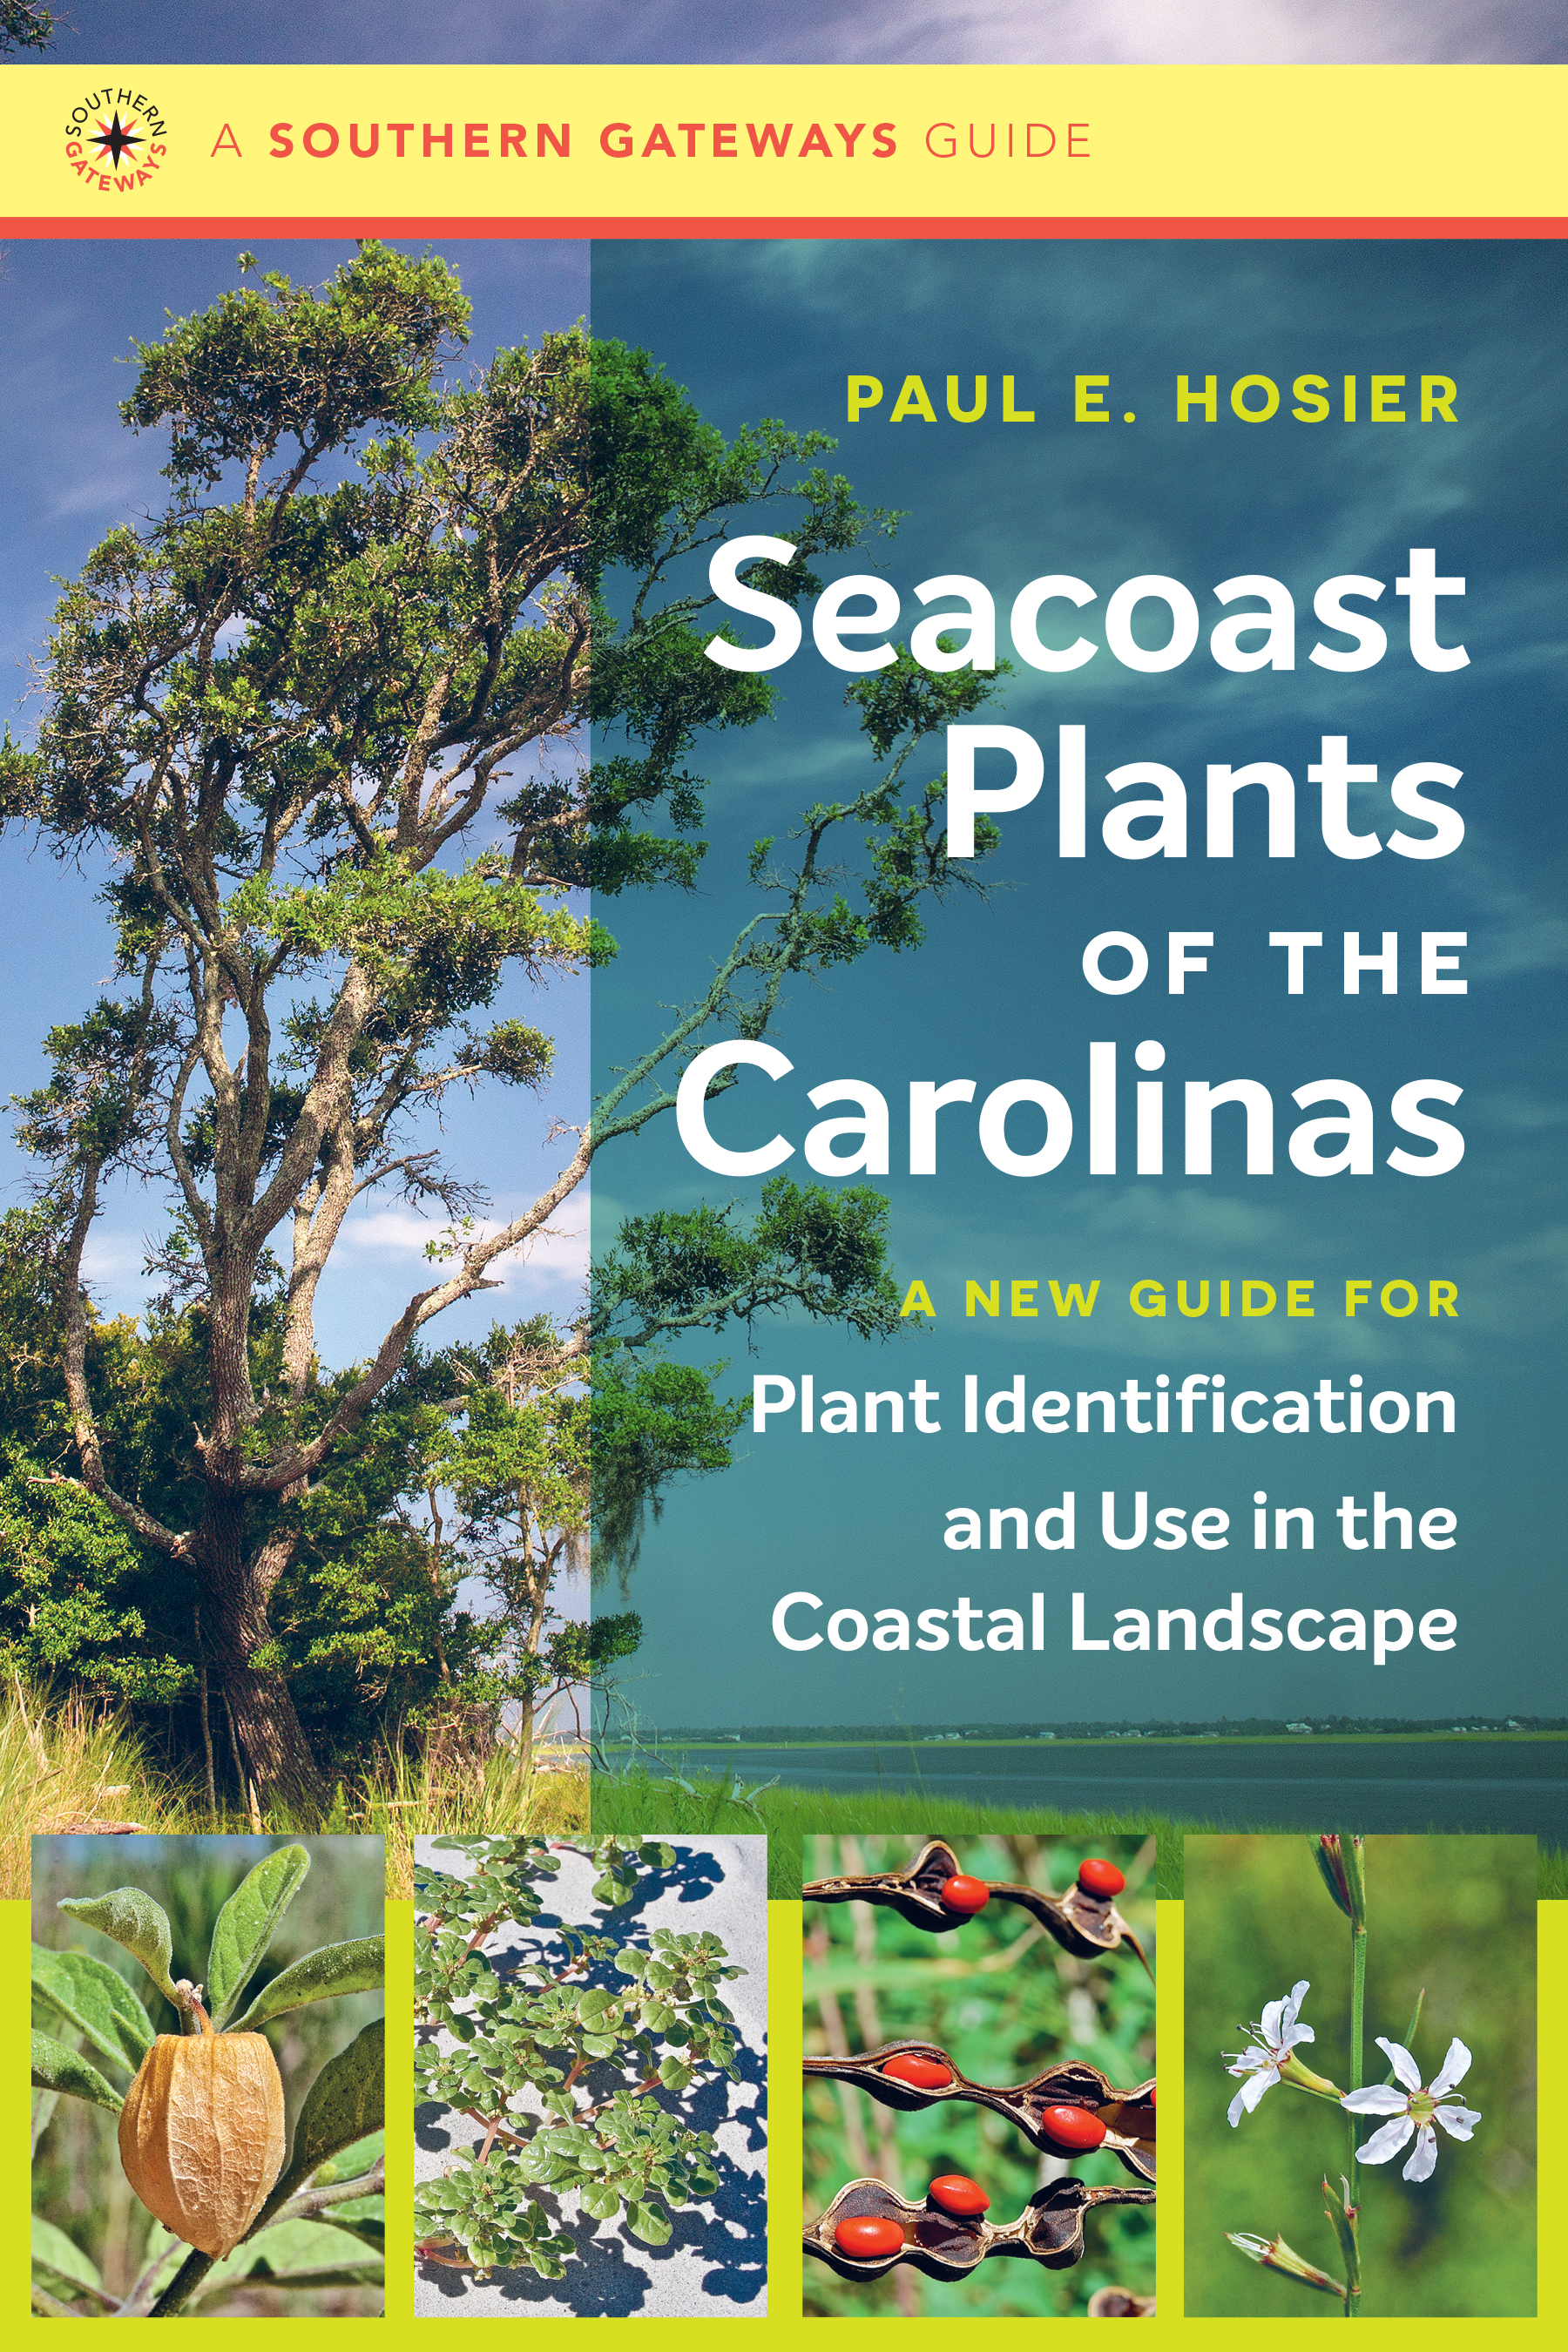 Book cover of Seacoast Plants of the Carolinas, by Paul E. Hosier.